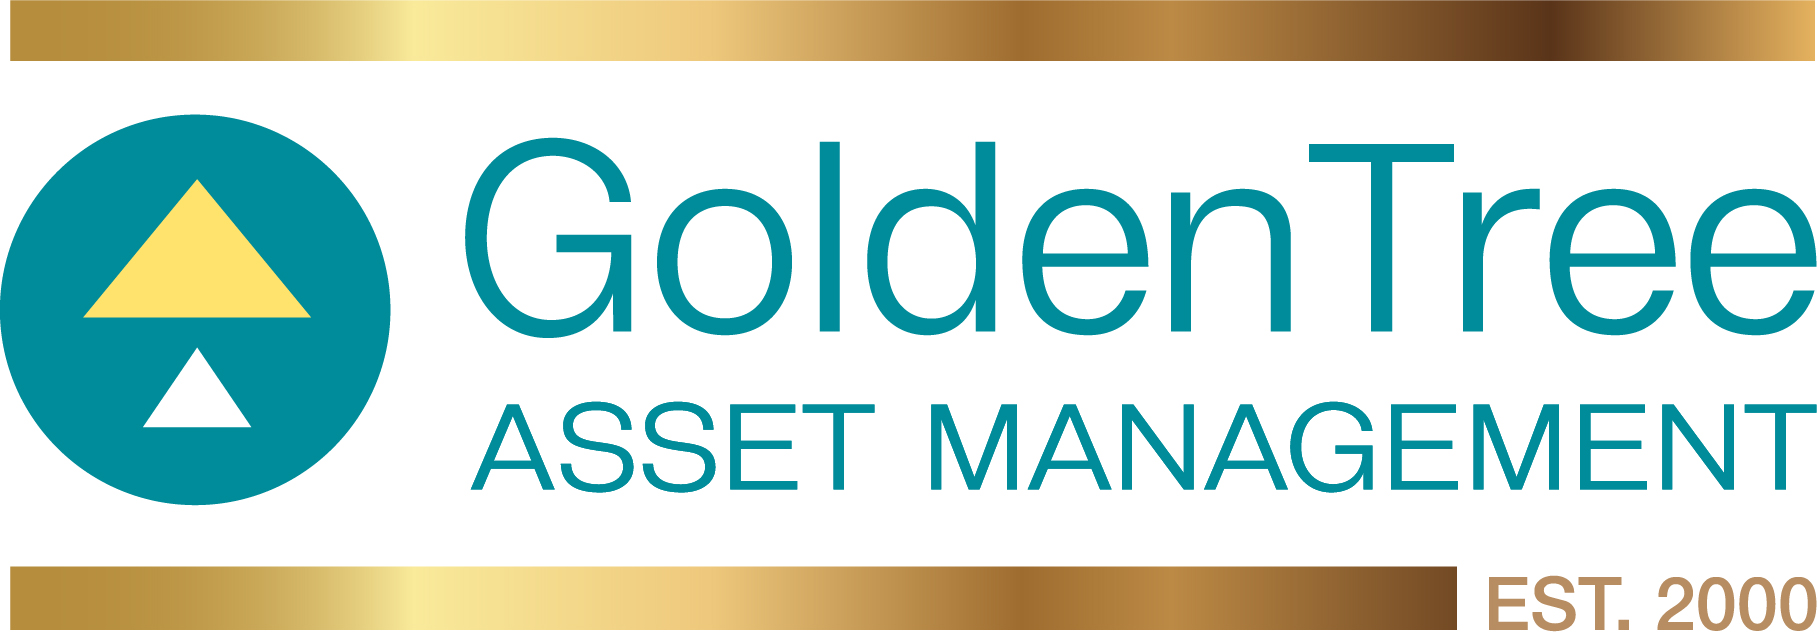 GoldenTree Asset Management - Wikipedia